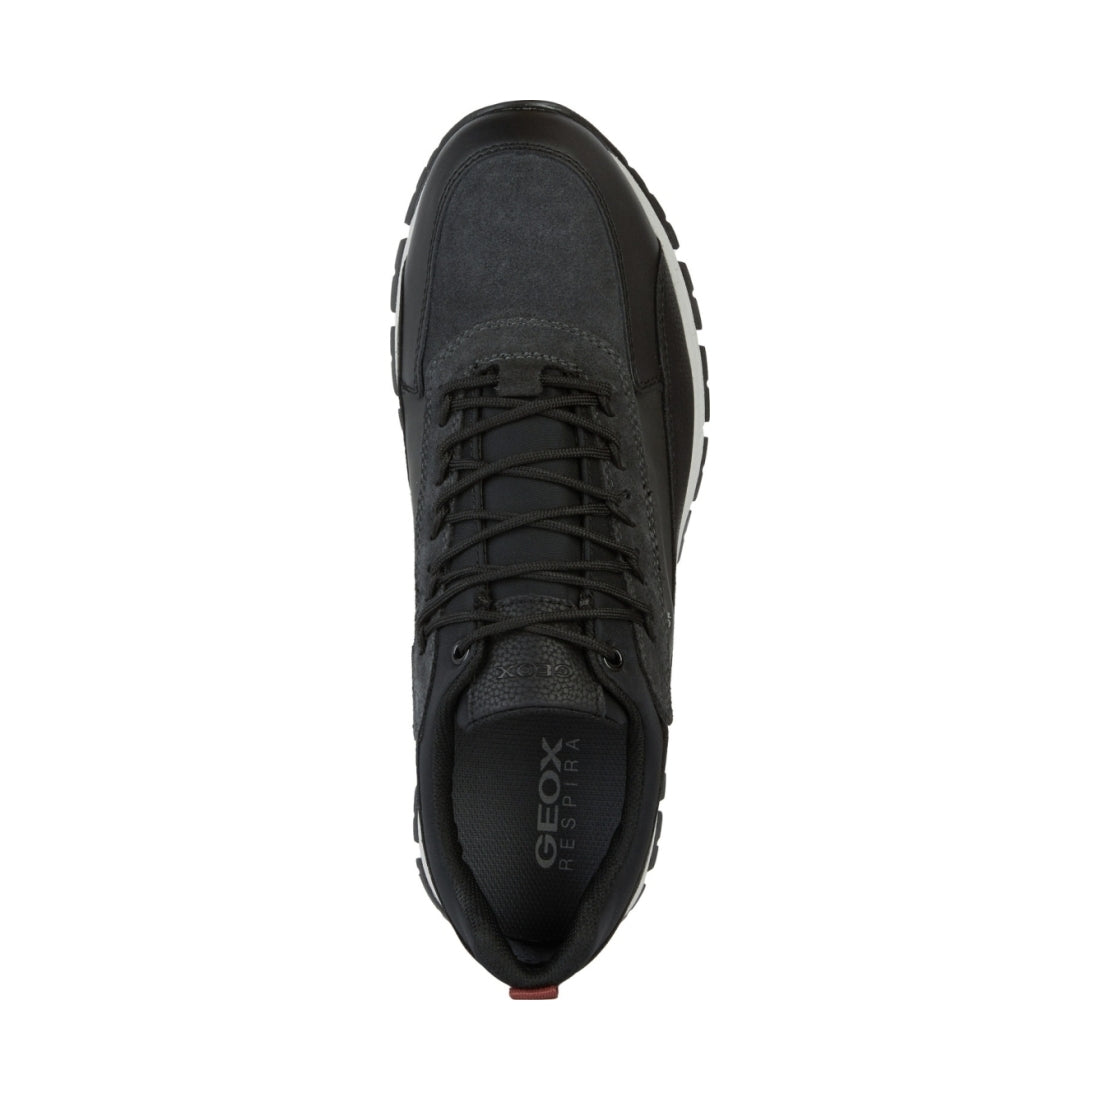 Geox mens Black Anthracite delray abx sport shoe | Vilbury London